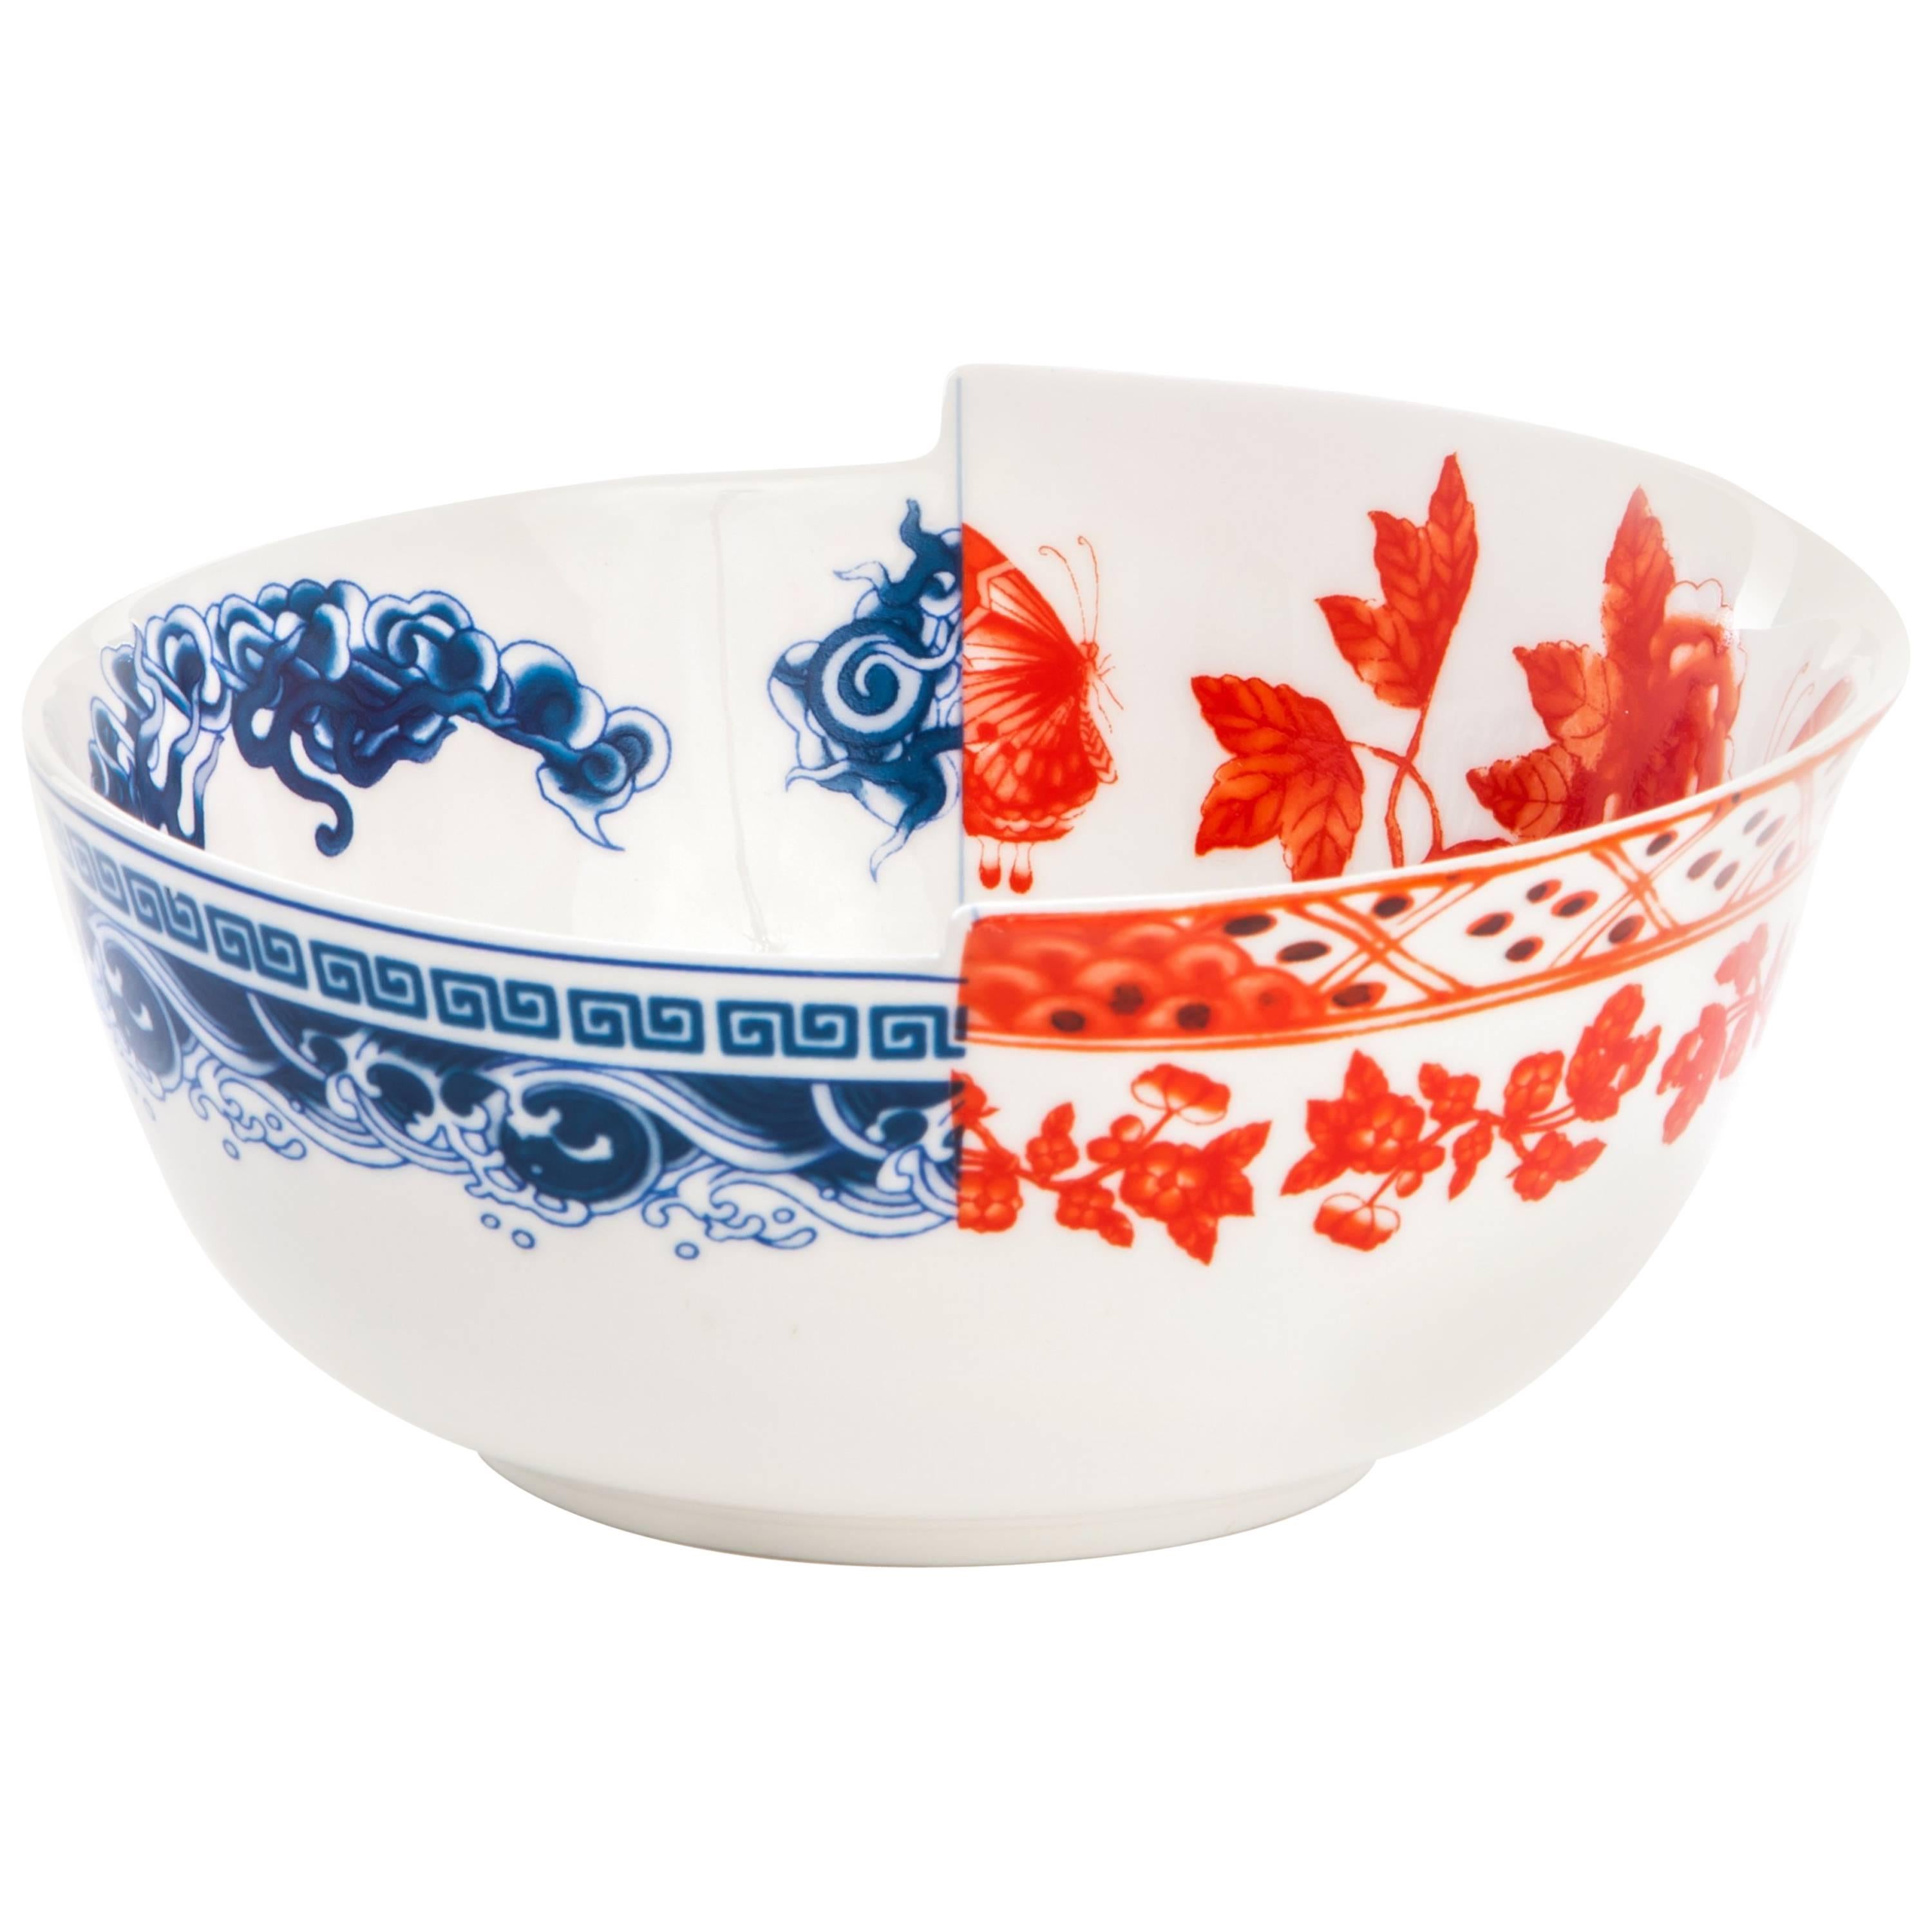 Seletti "Hybrid-Eutropia" Bowl in Porcelain